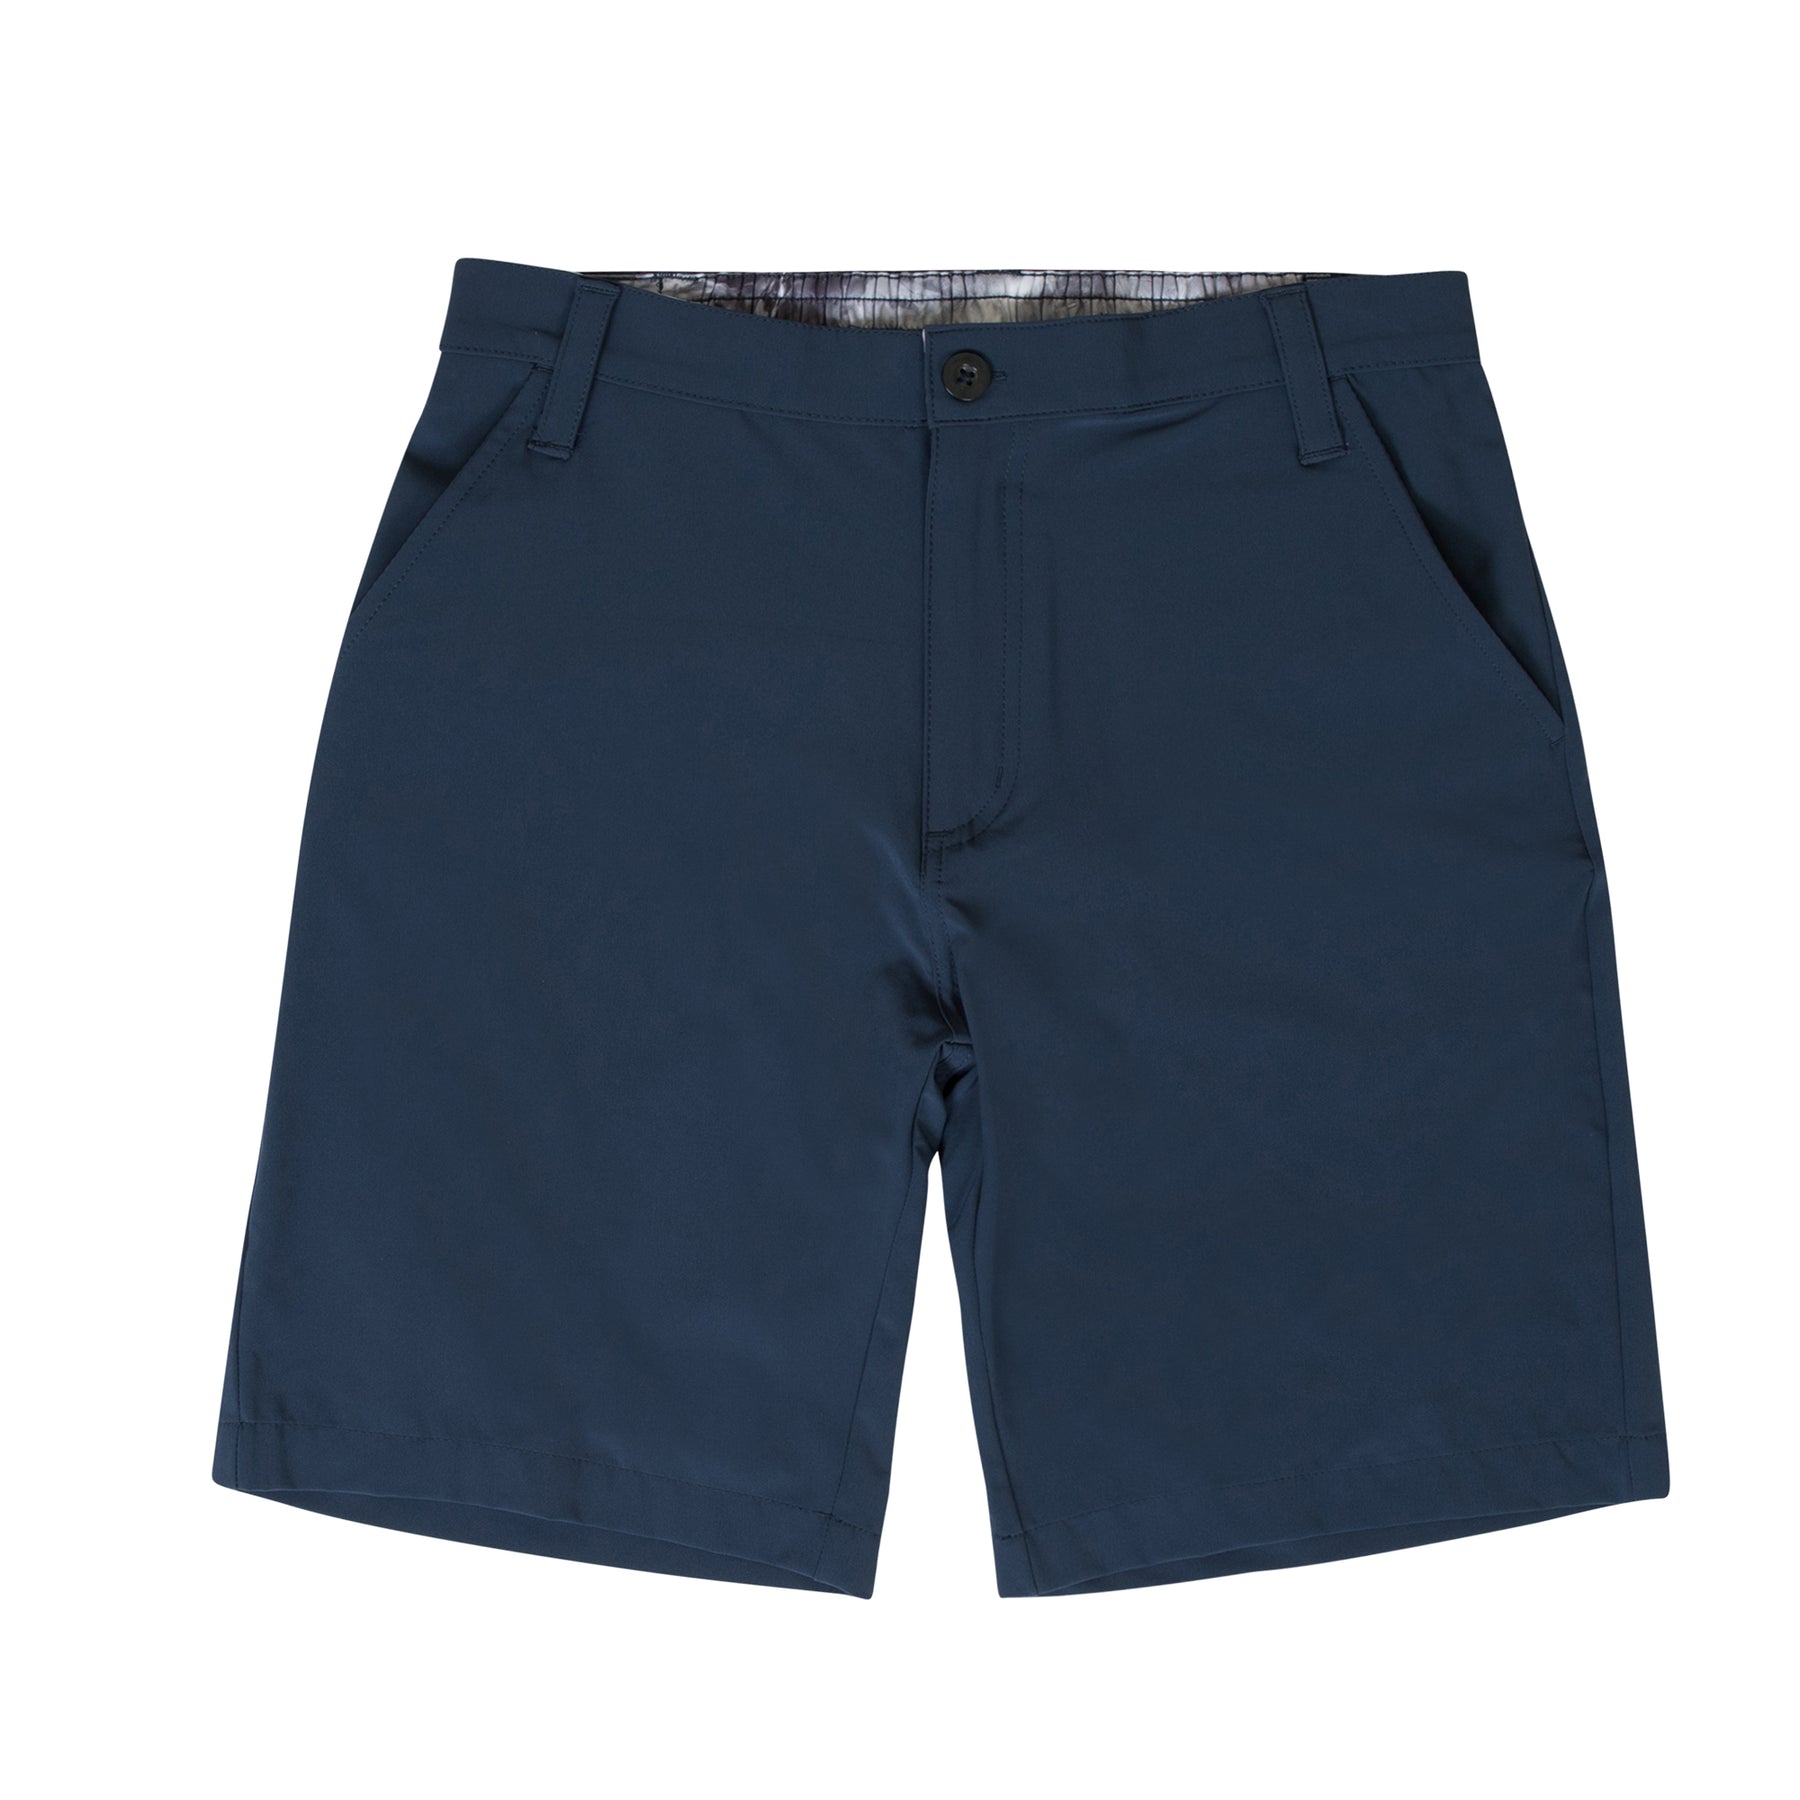 Mossy Oak Men's Standard Fishing Shorts Quick Dry Flex, Antracite